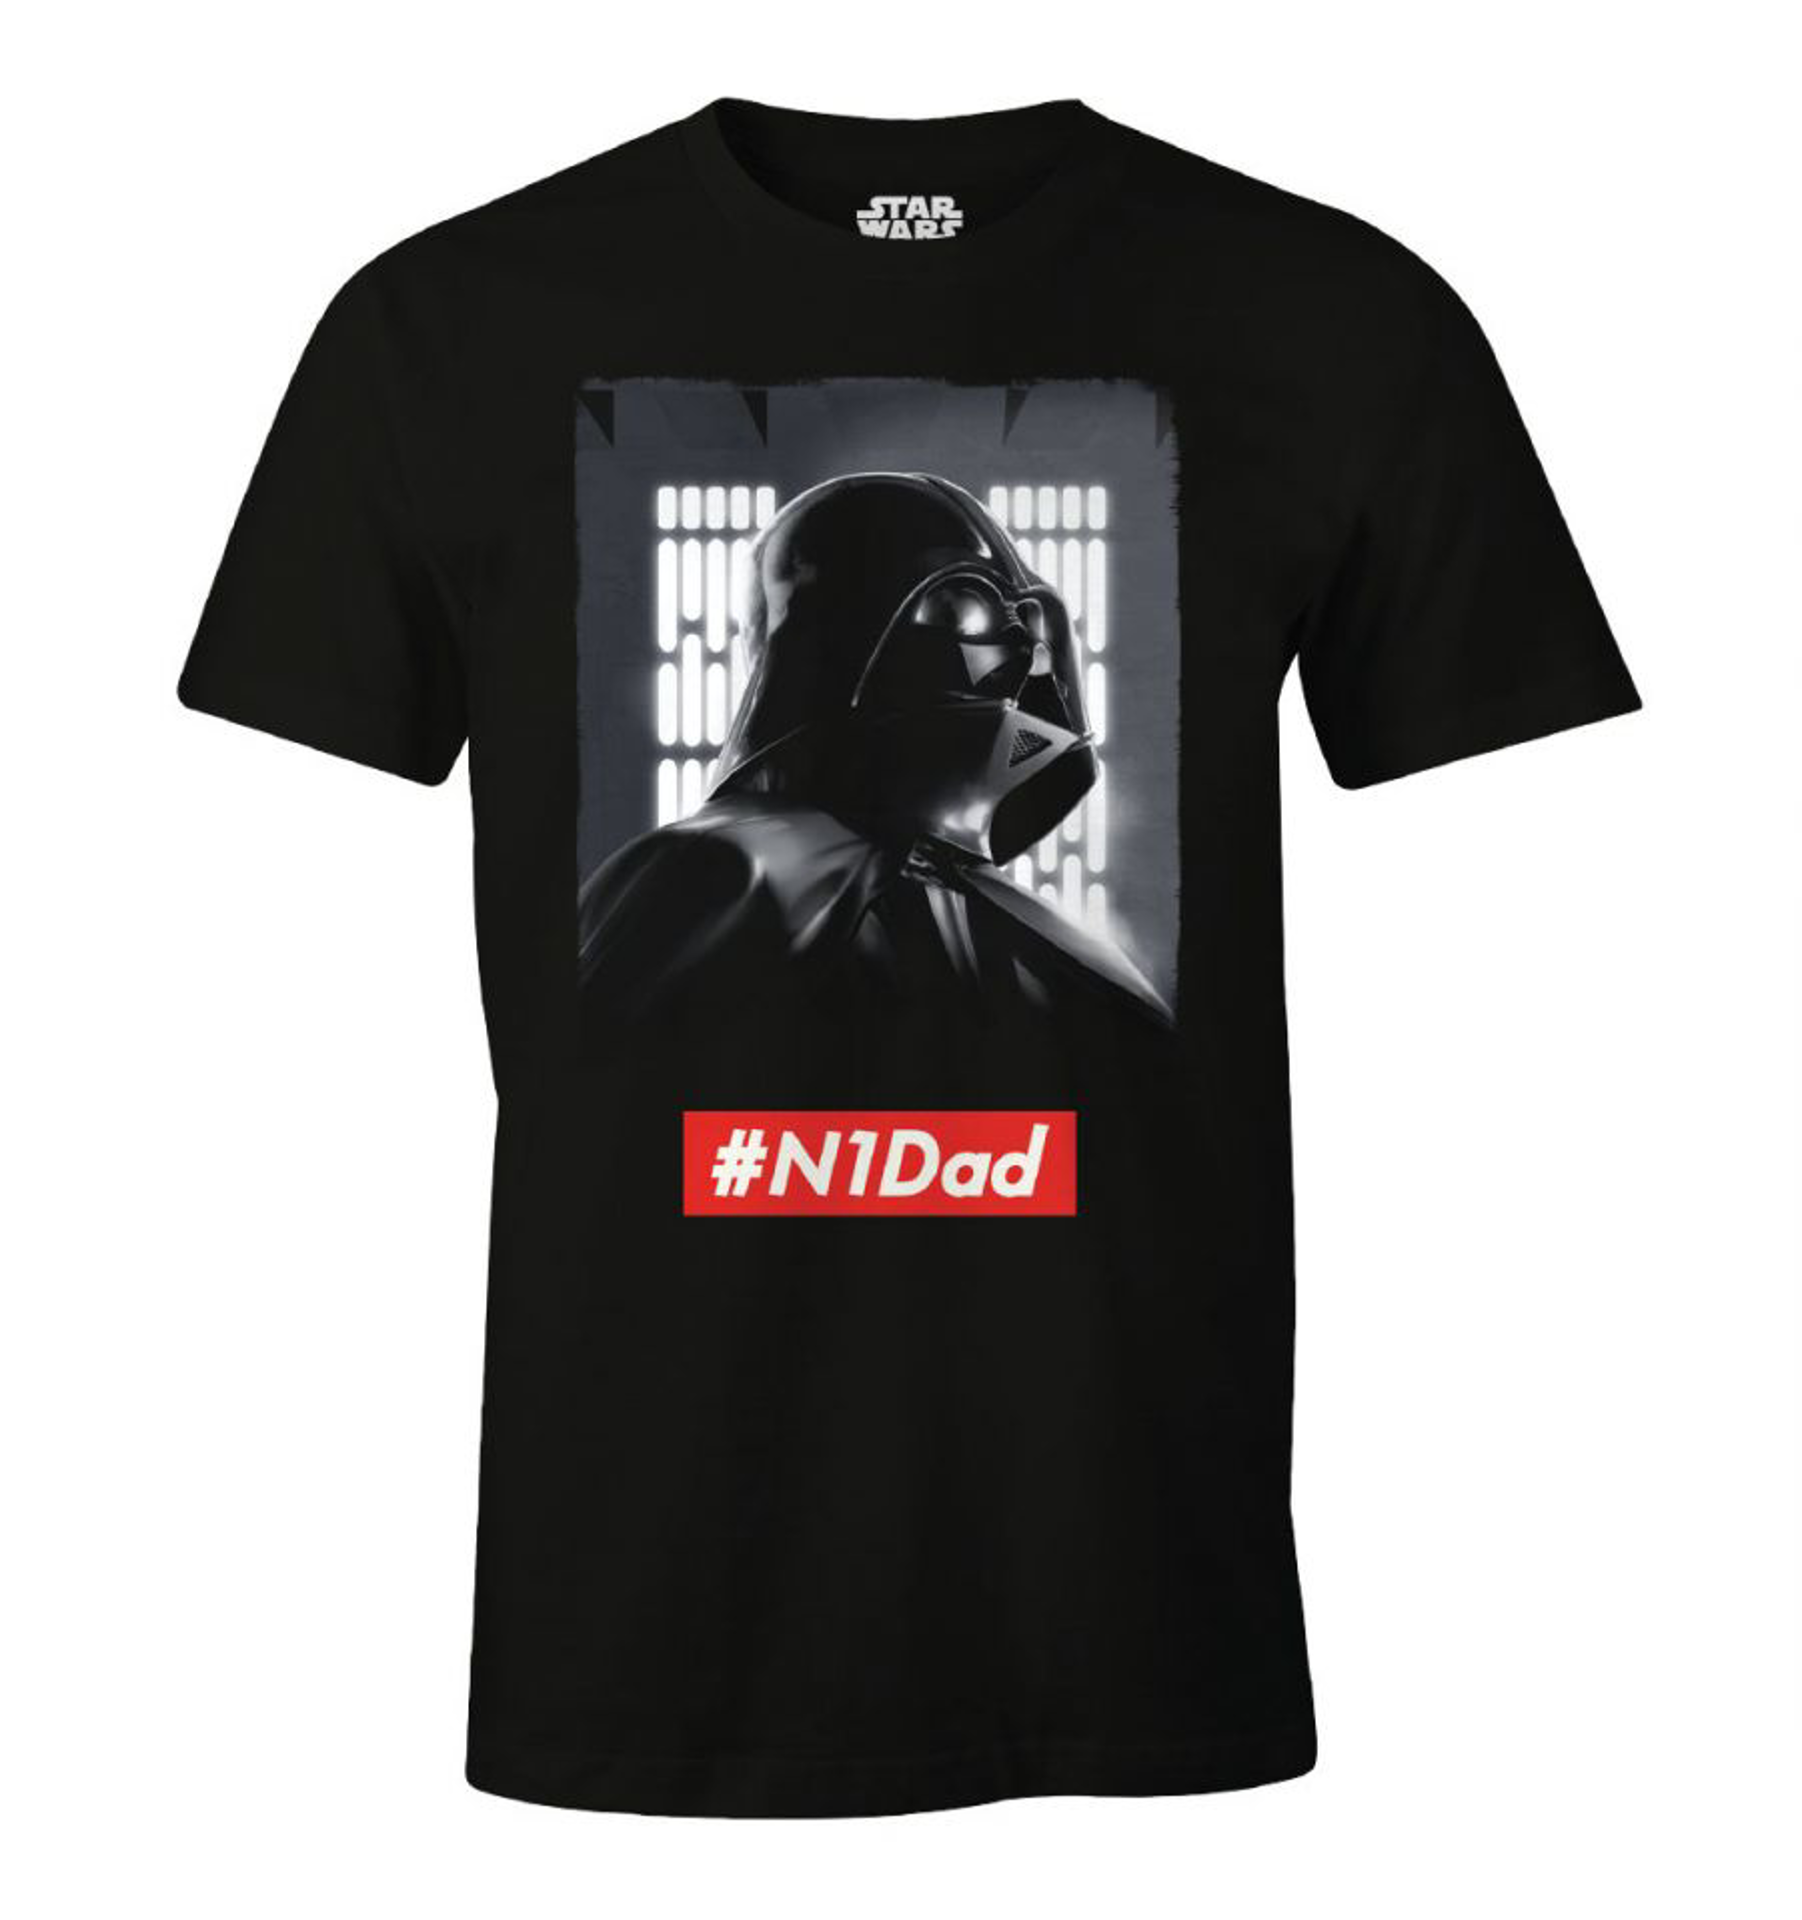 Star Wars - N1Dad Black T-Shirt - S